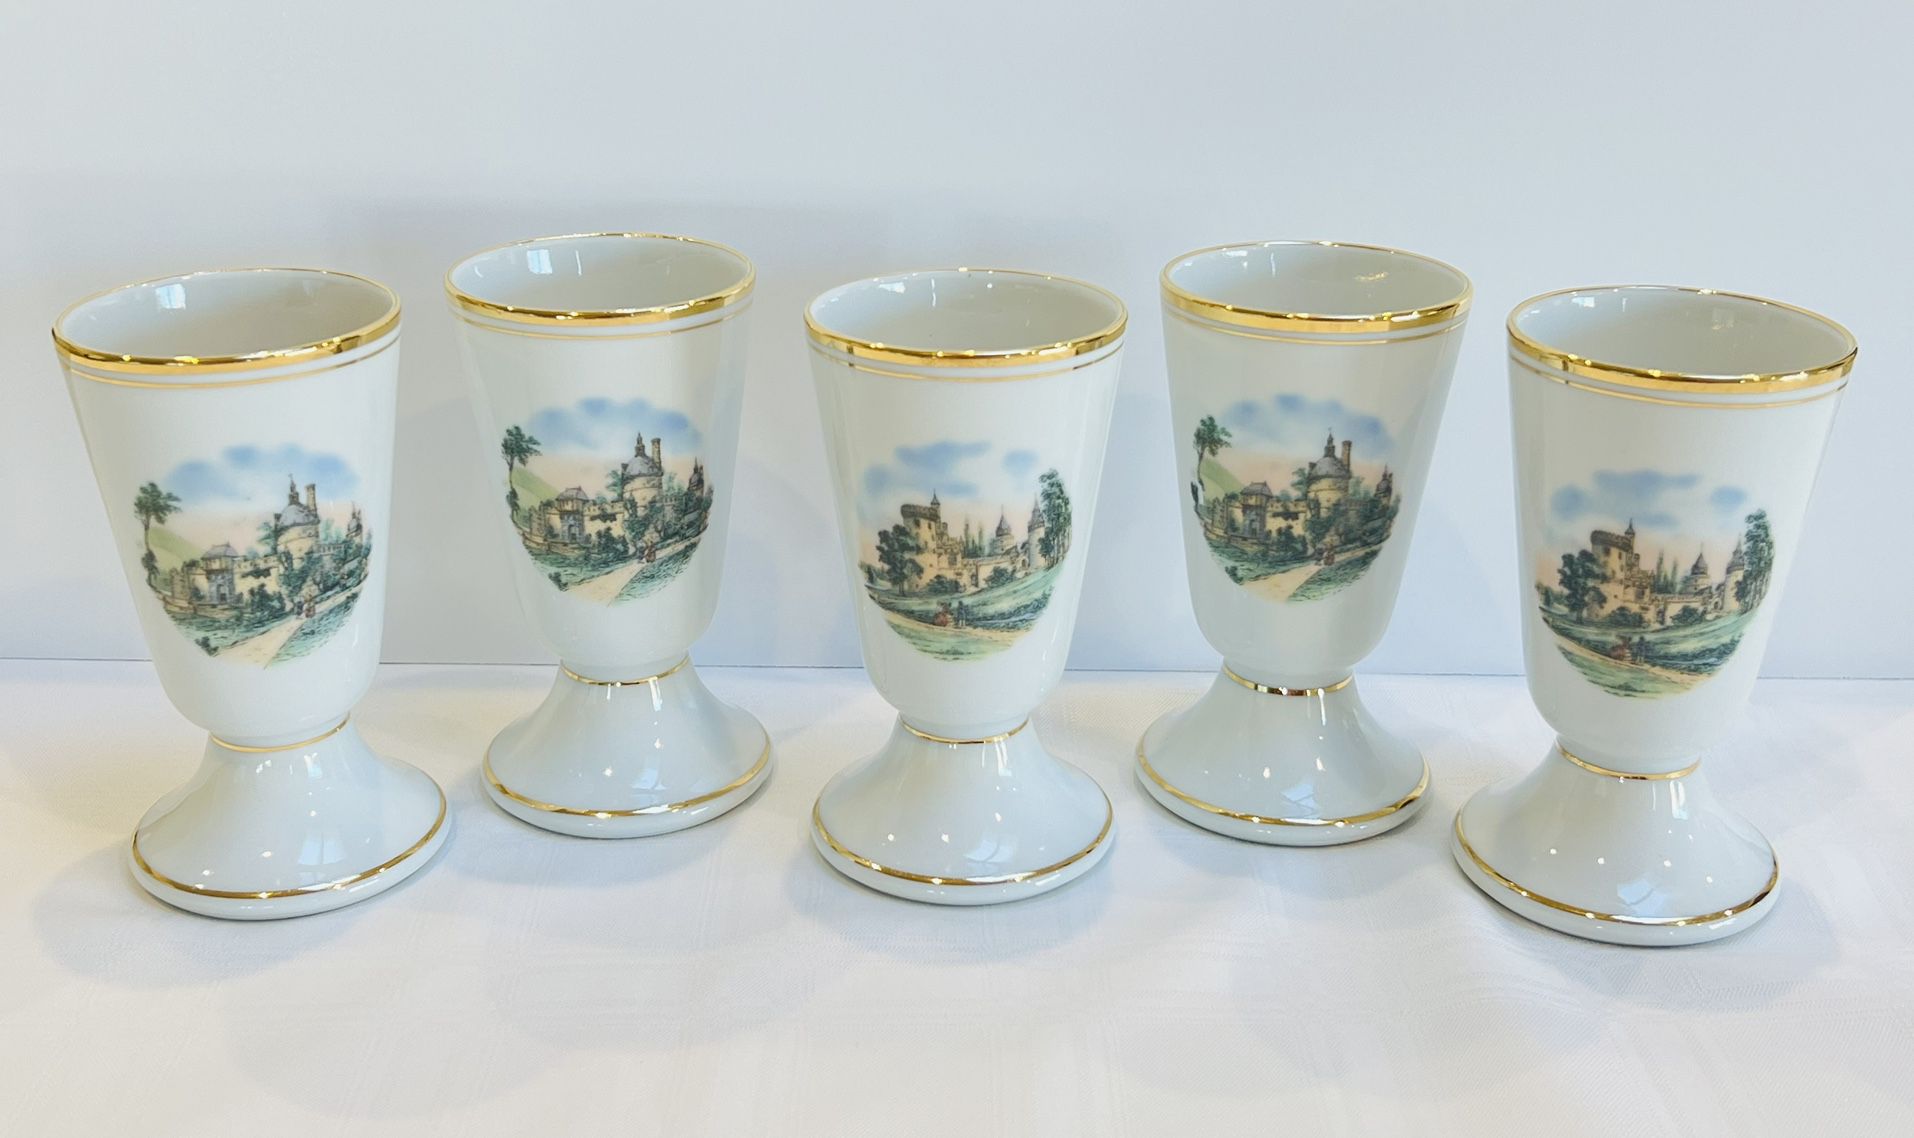 Set of 5 ~ Veritable Porcelain De France Footed Cups ~ Gold Rim/Trim ~ Vintage 1960s